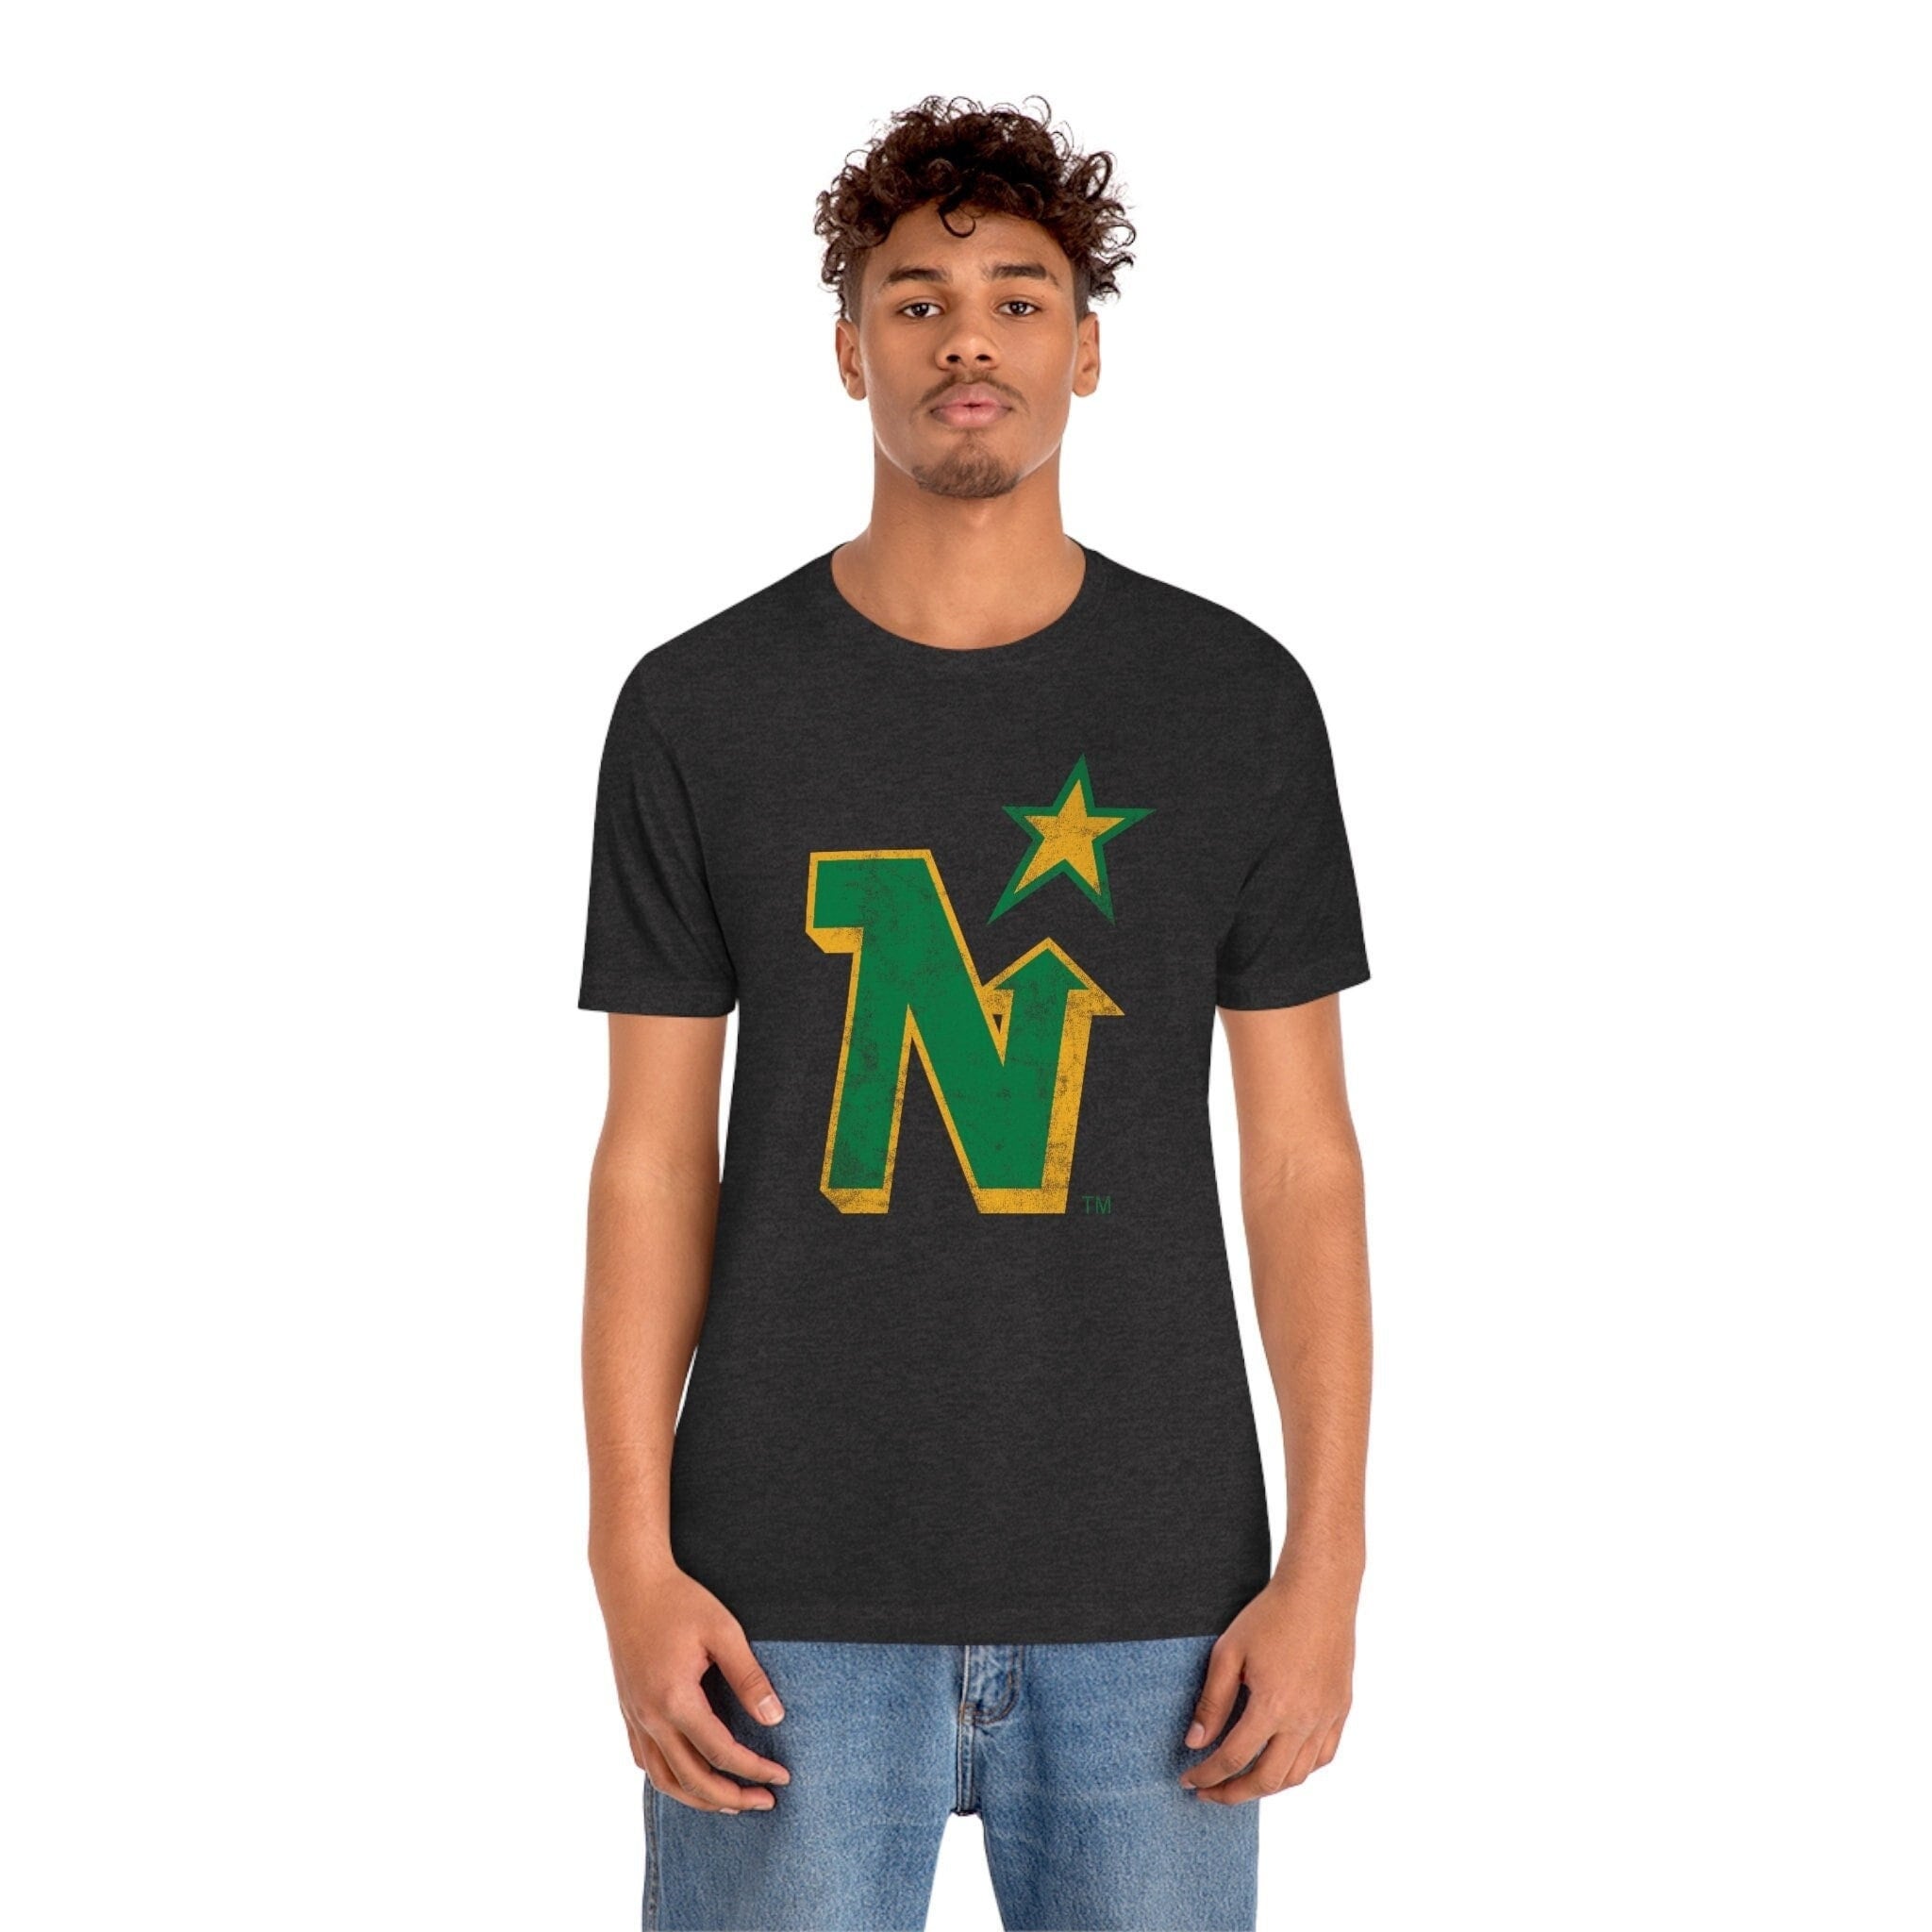 Minnesota North Stars Vintage Throwback Green Jersey